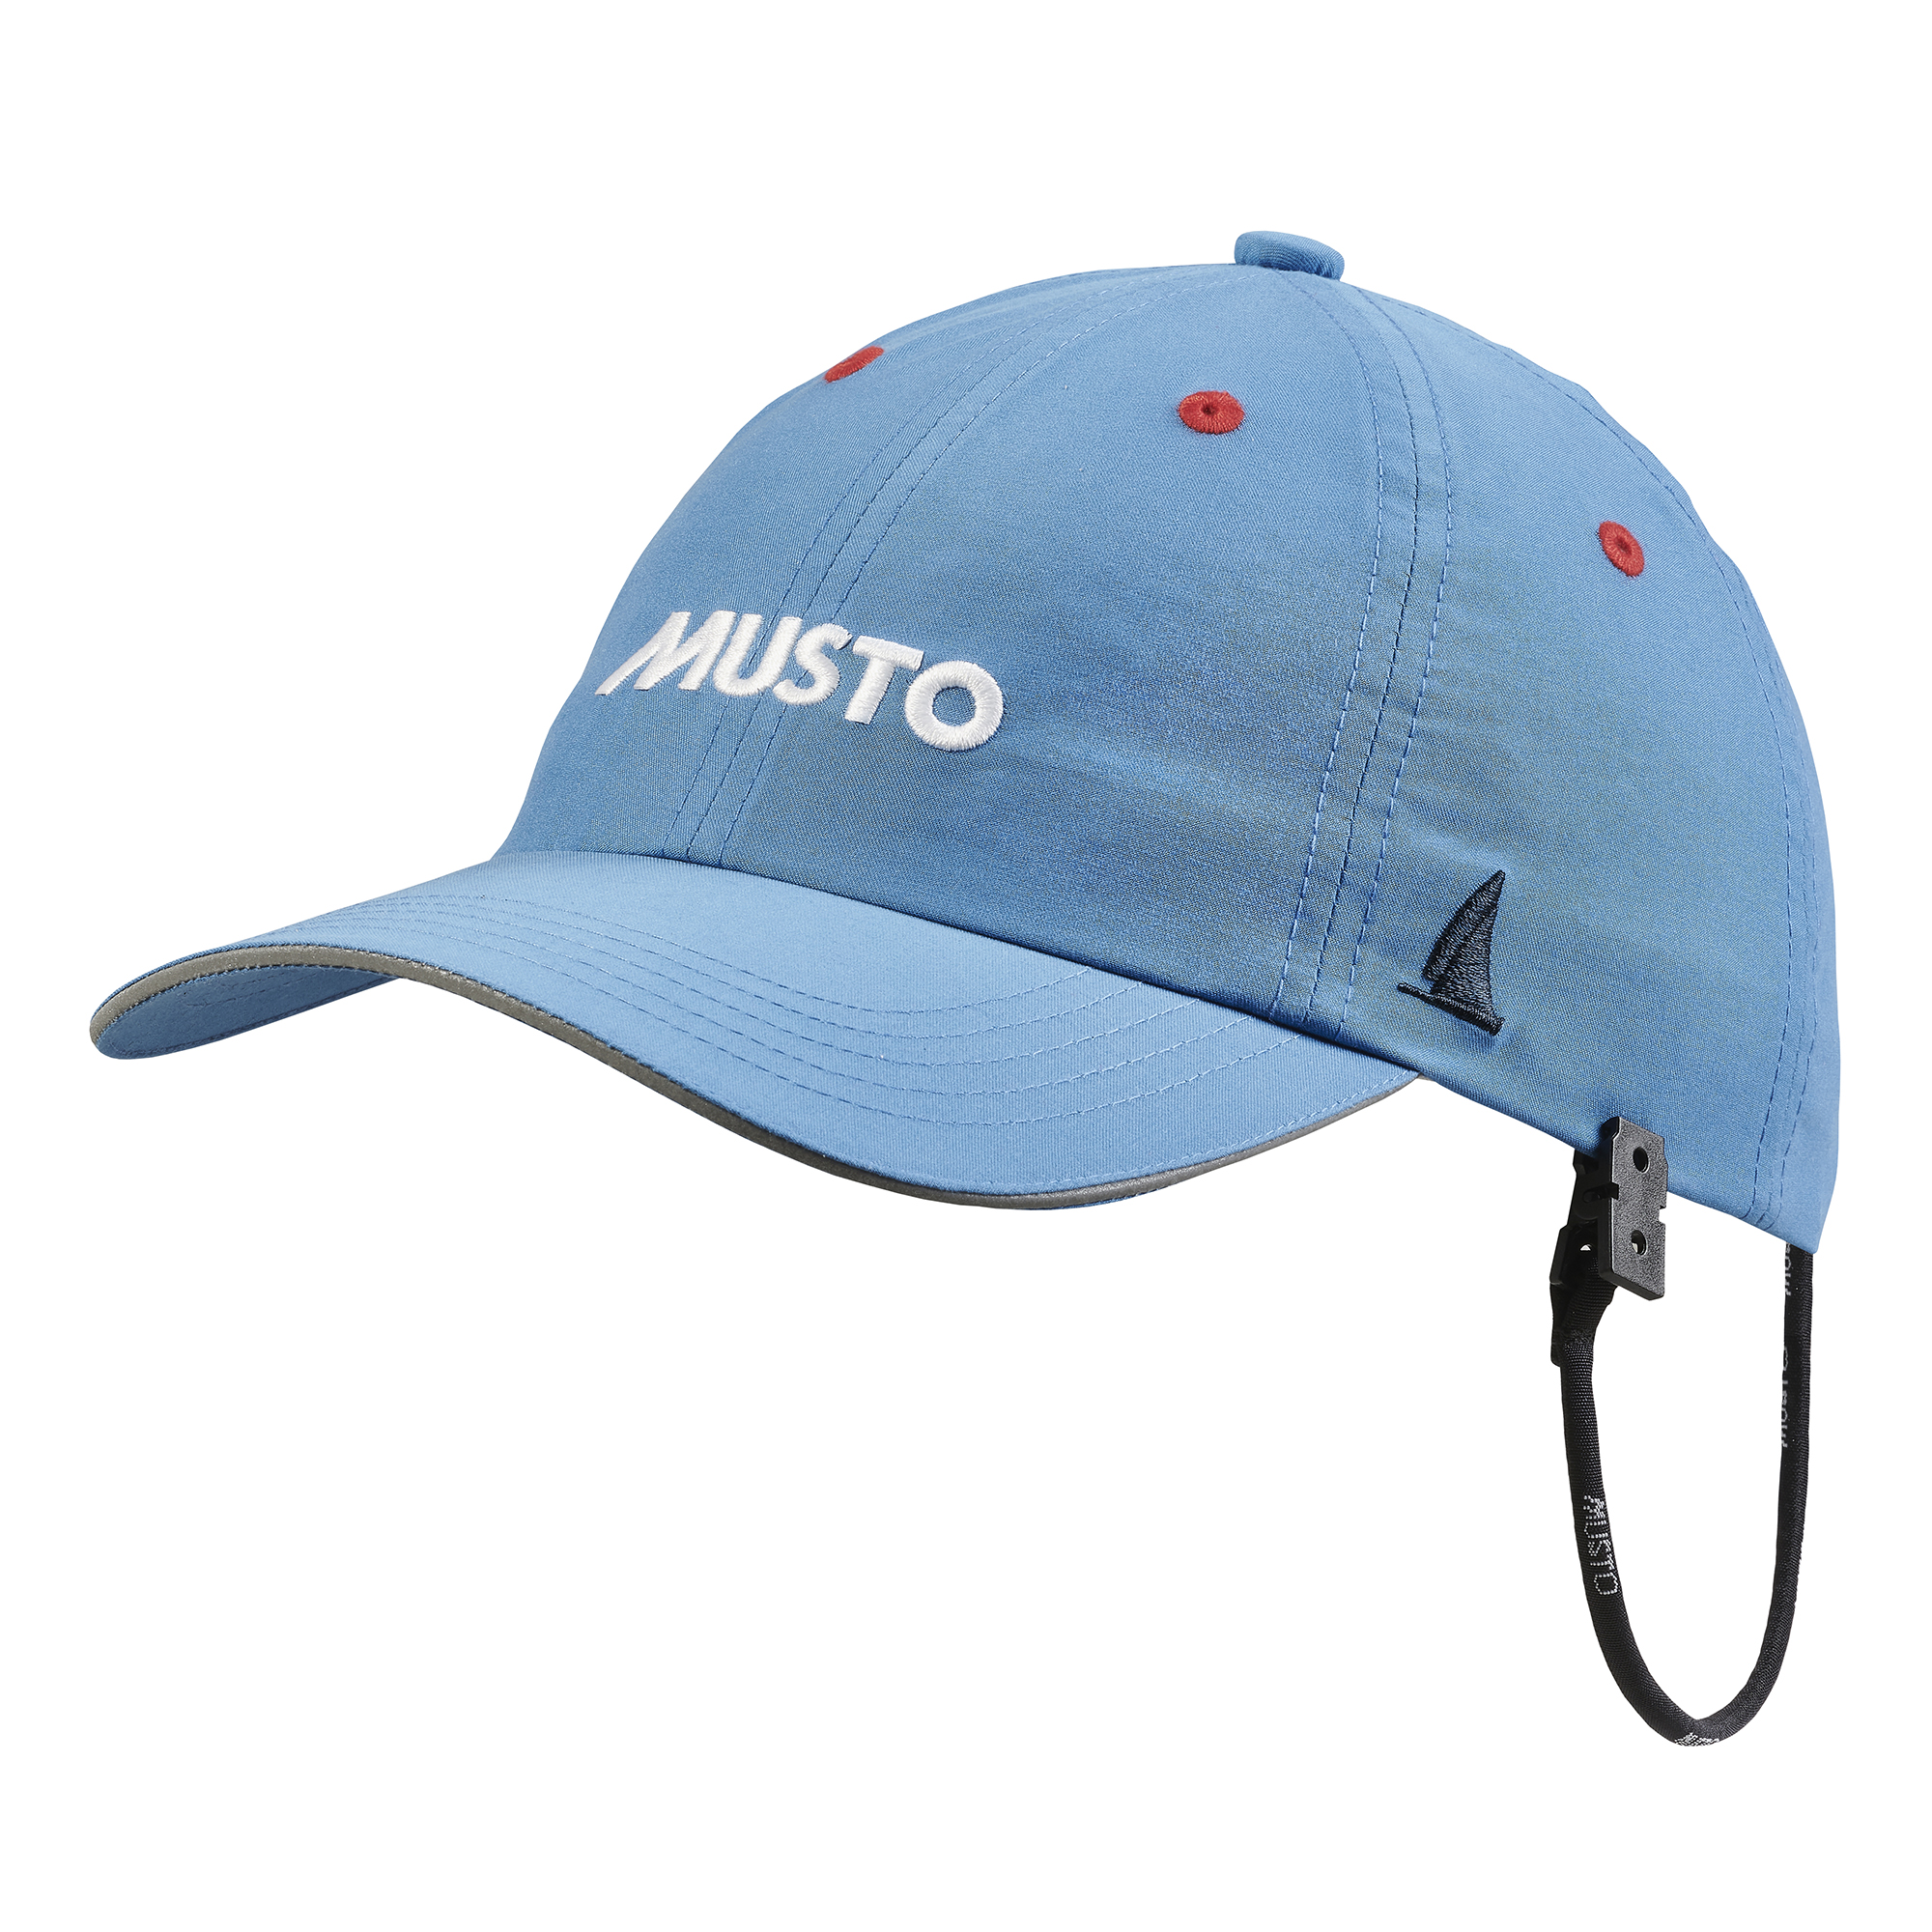 Musto Fast Dry Crew Cap vallarta blue